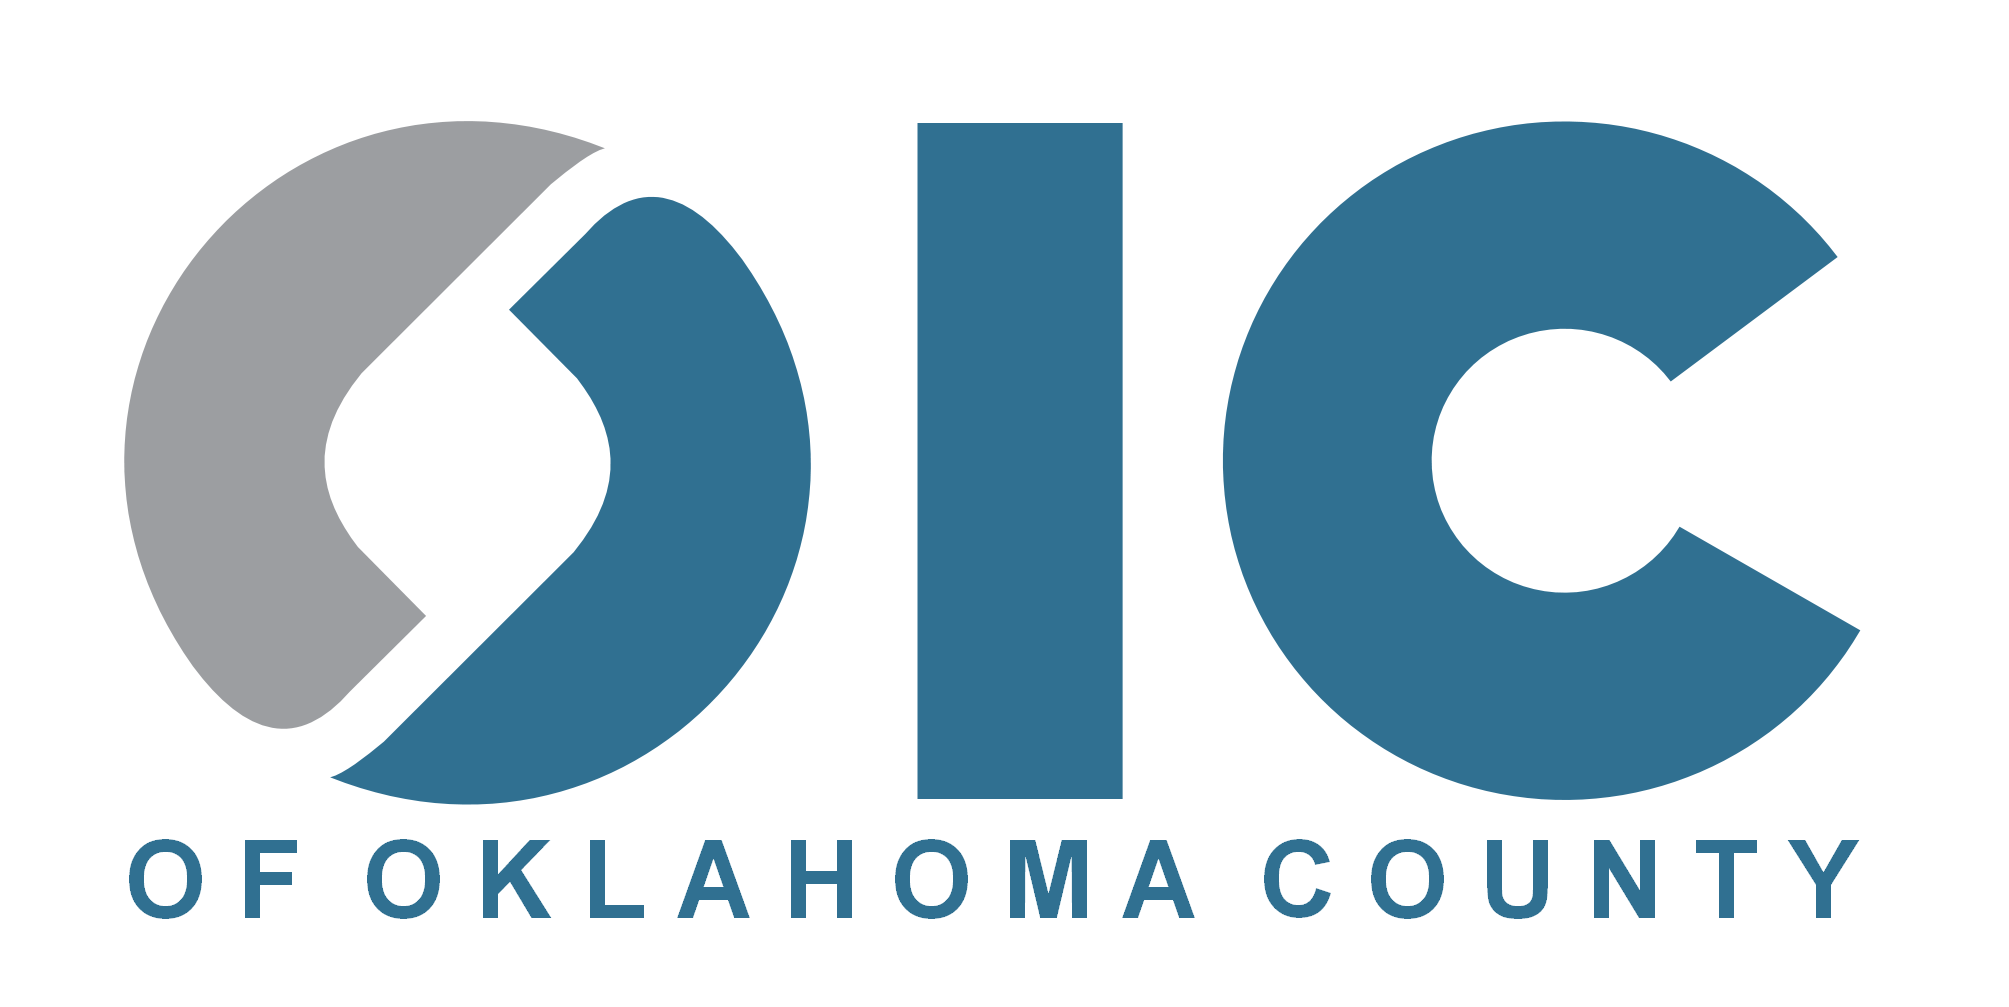 Opportunities Industrialization Center of Oklahoma County, Inc. (OIC) dba OIC of Oklahoma County logo